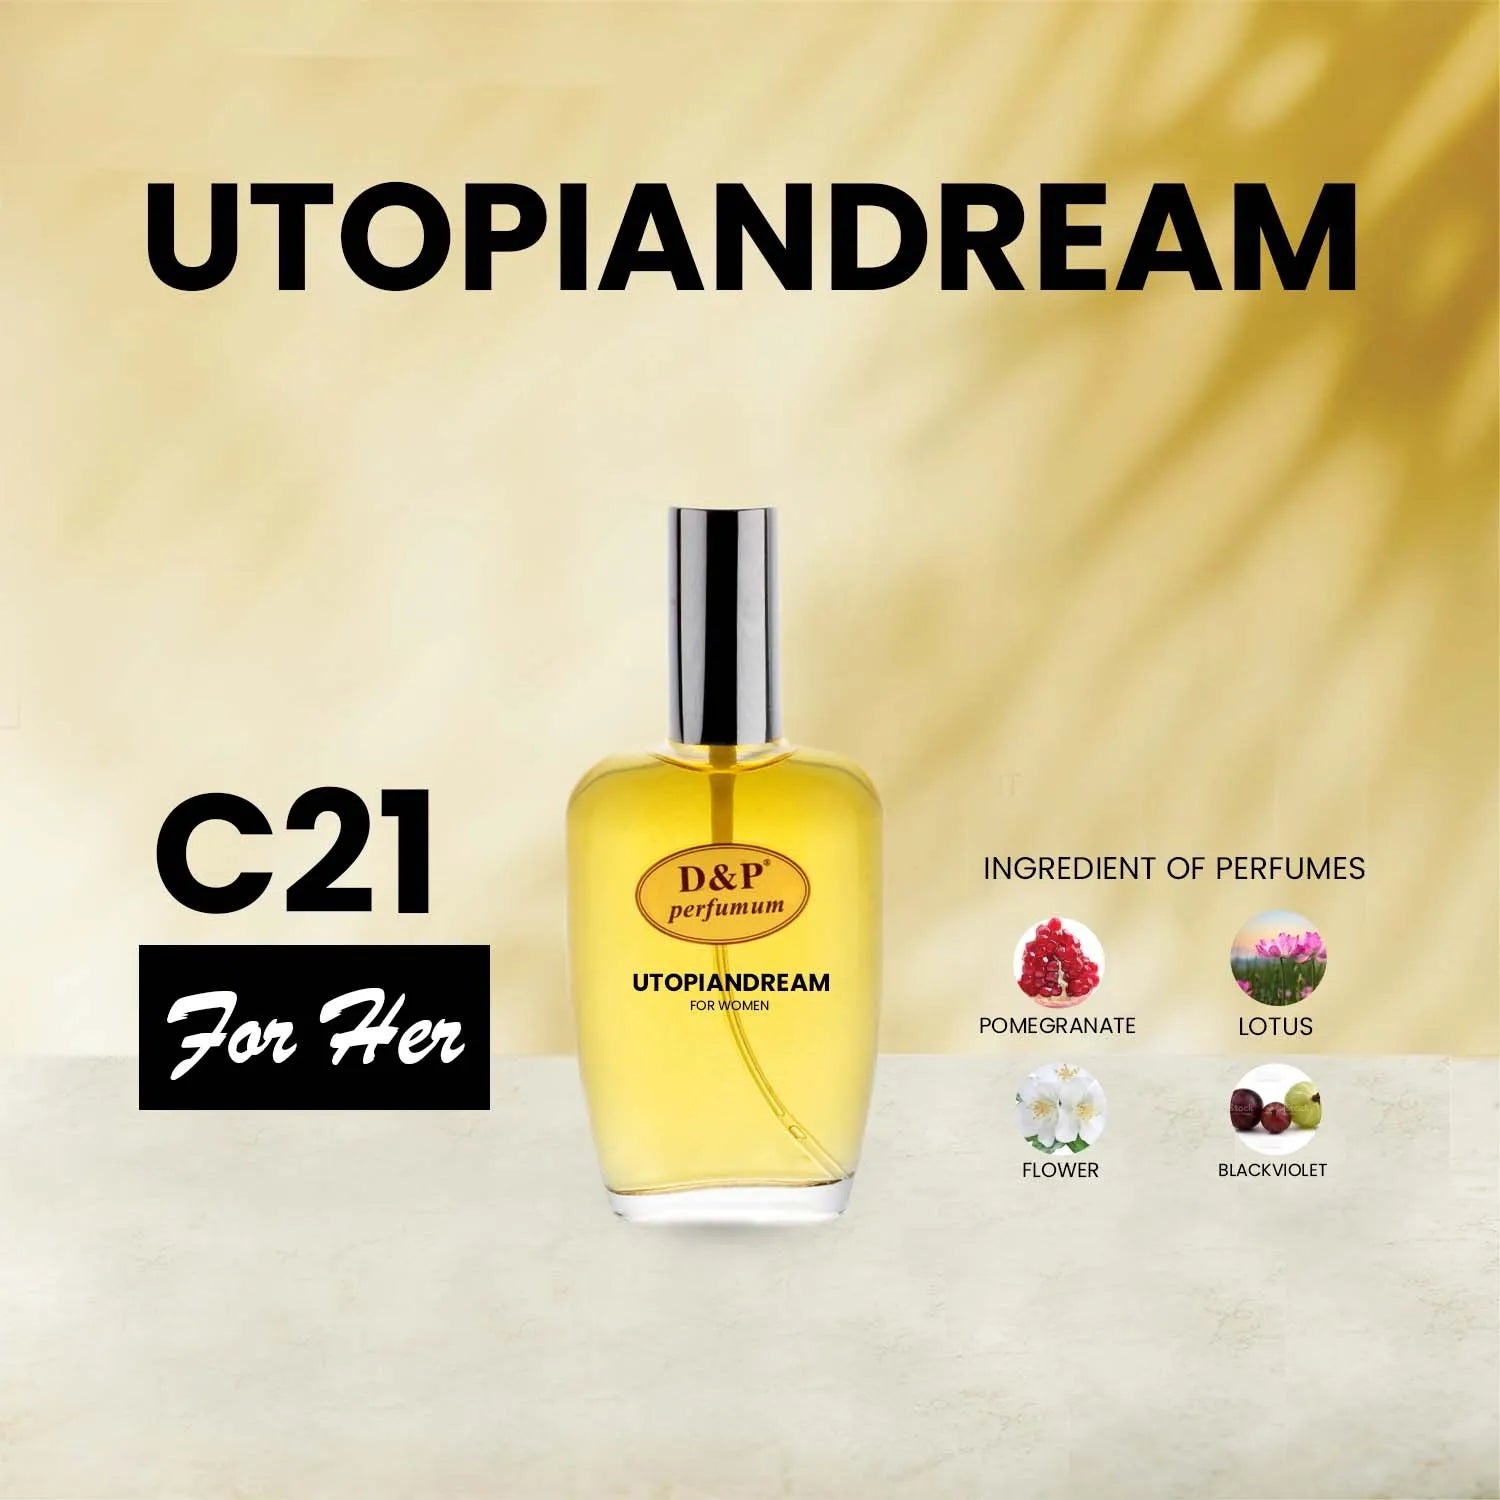 Utopian dream perfume for women-C21